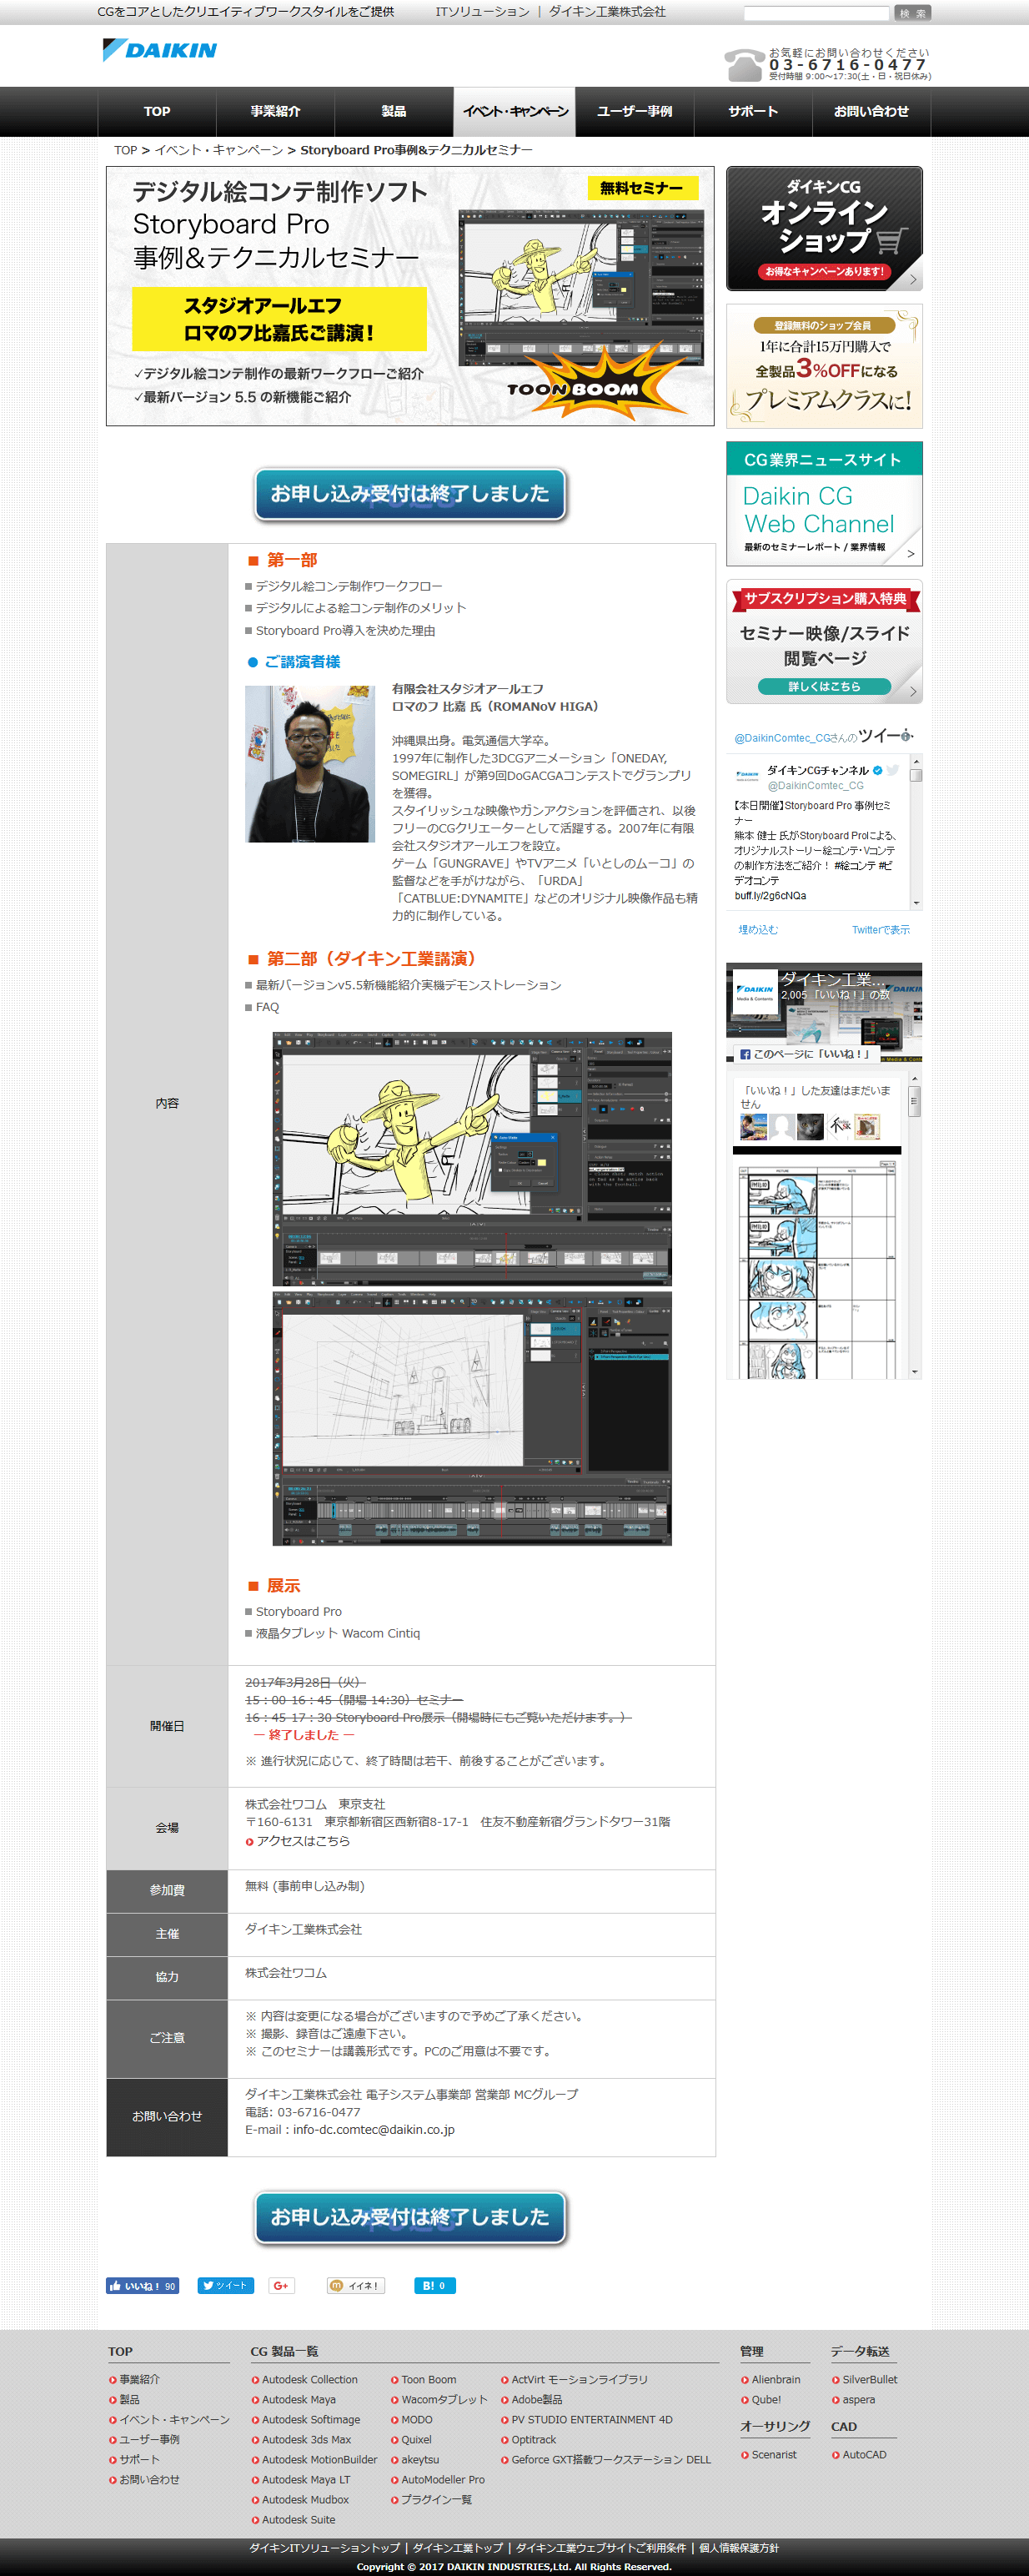 Storyboard Pro事例&テクニカルセミナー